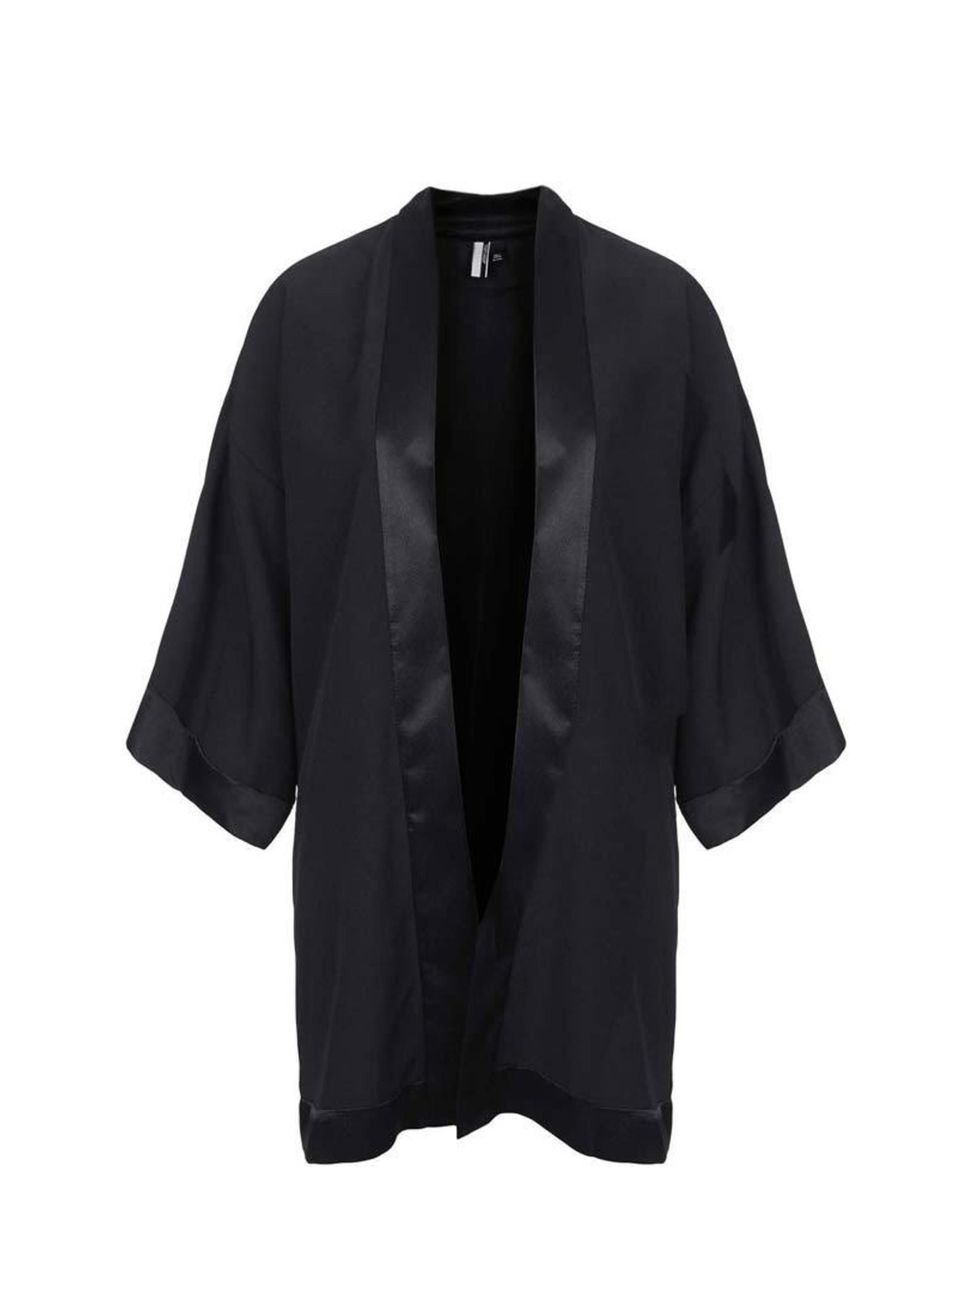 <p>We love this one</p>

<p><a href="http://www.topshop.com/en/tsuk/product/clothing-427/jackets-coats-2390889/satin-back-crepe-kimono-3231871?bi=1&ps=20">Topshop</a> jacket, £48</p>